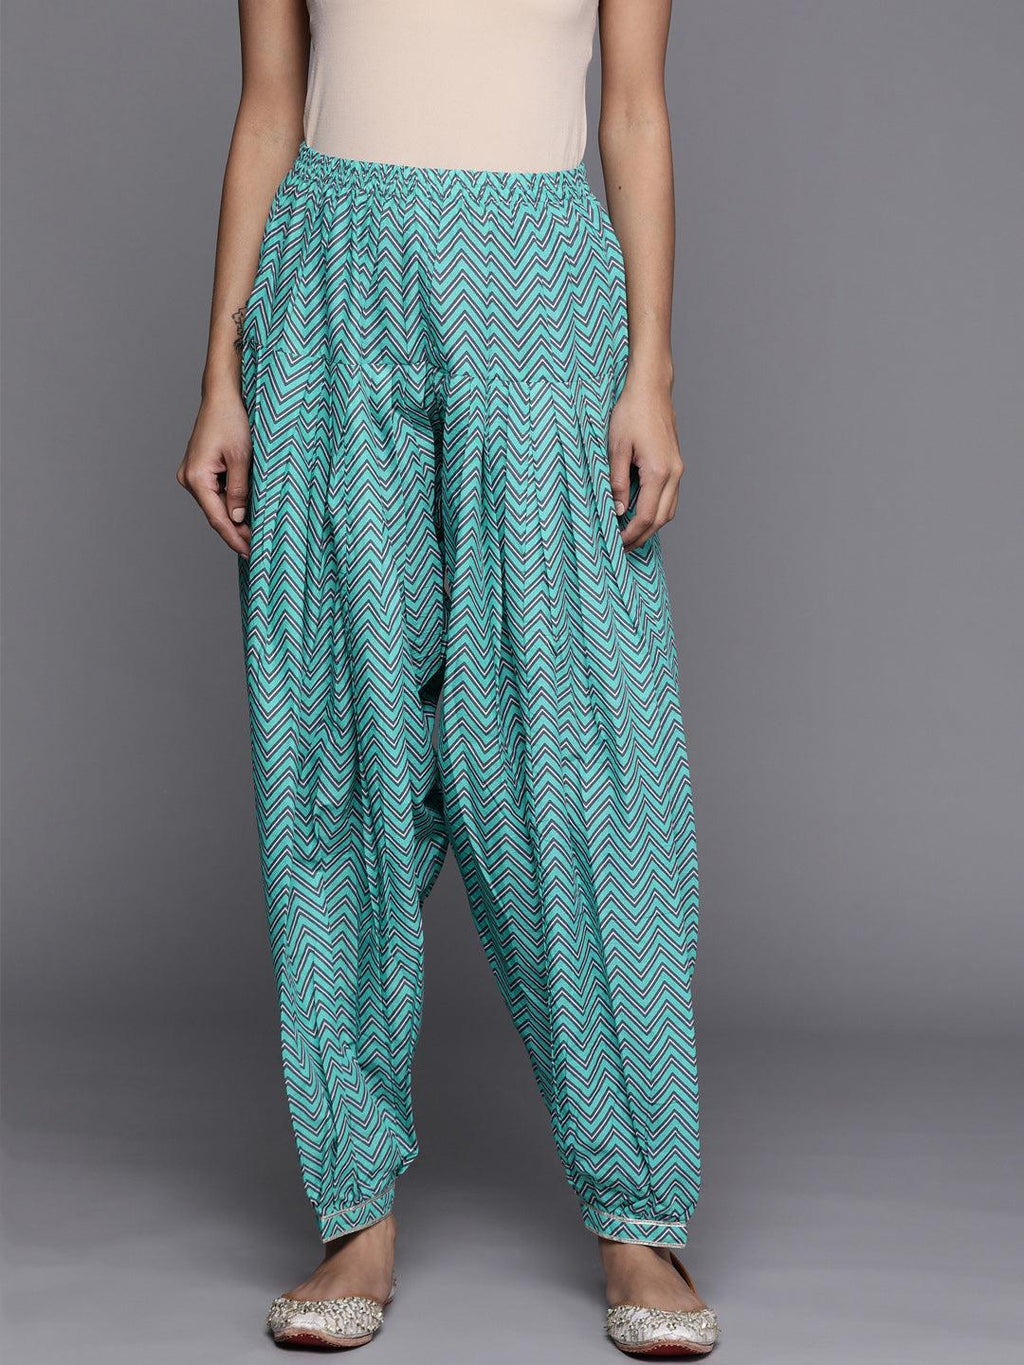 Buy Blue Printed Cotton Salwar Pants Online at Rs.428 | Libas